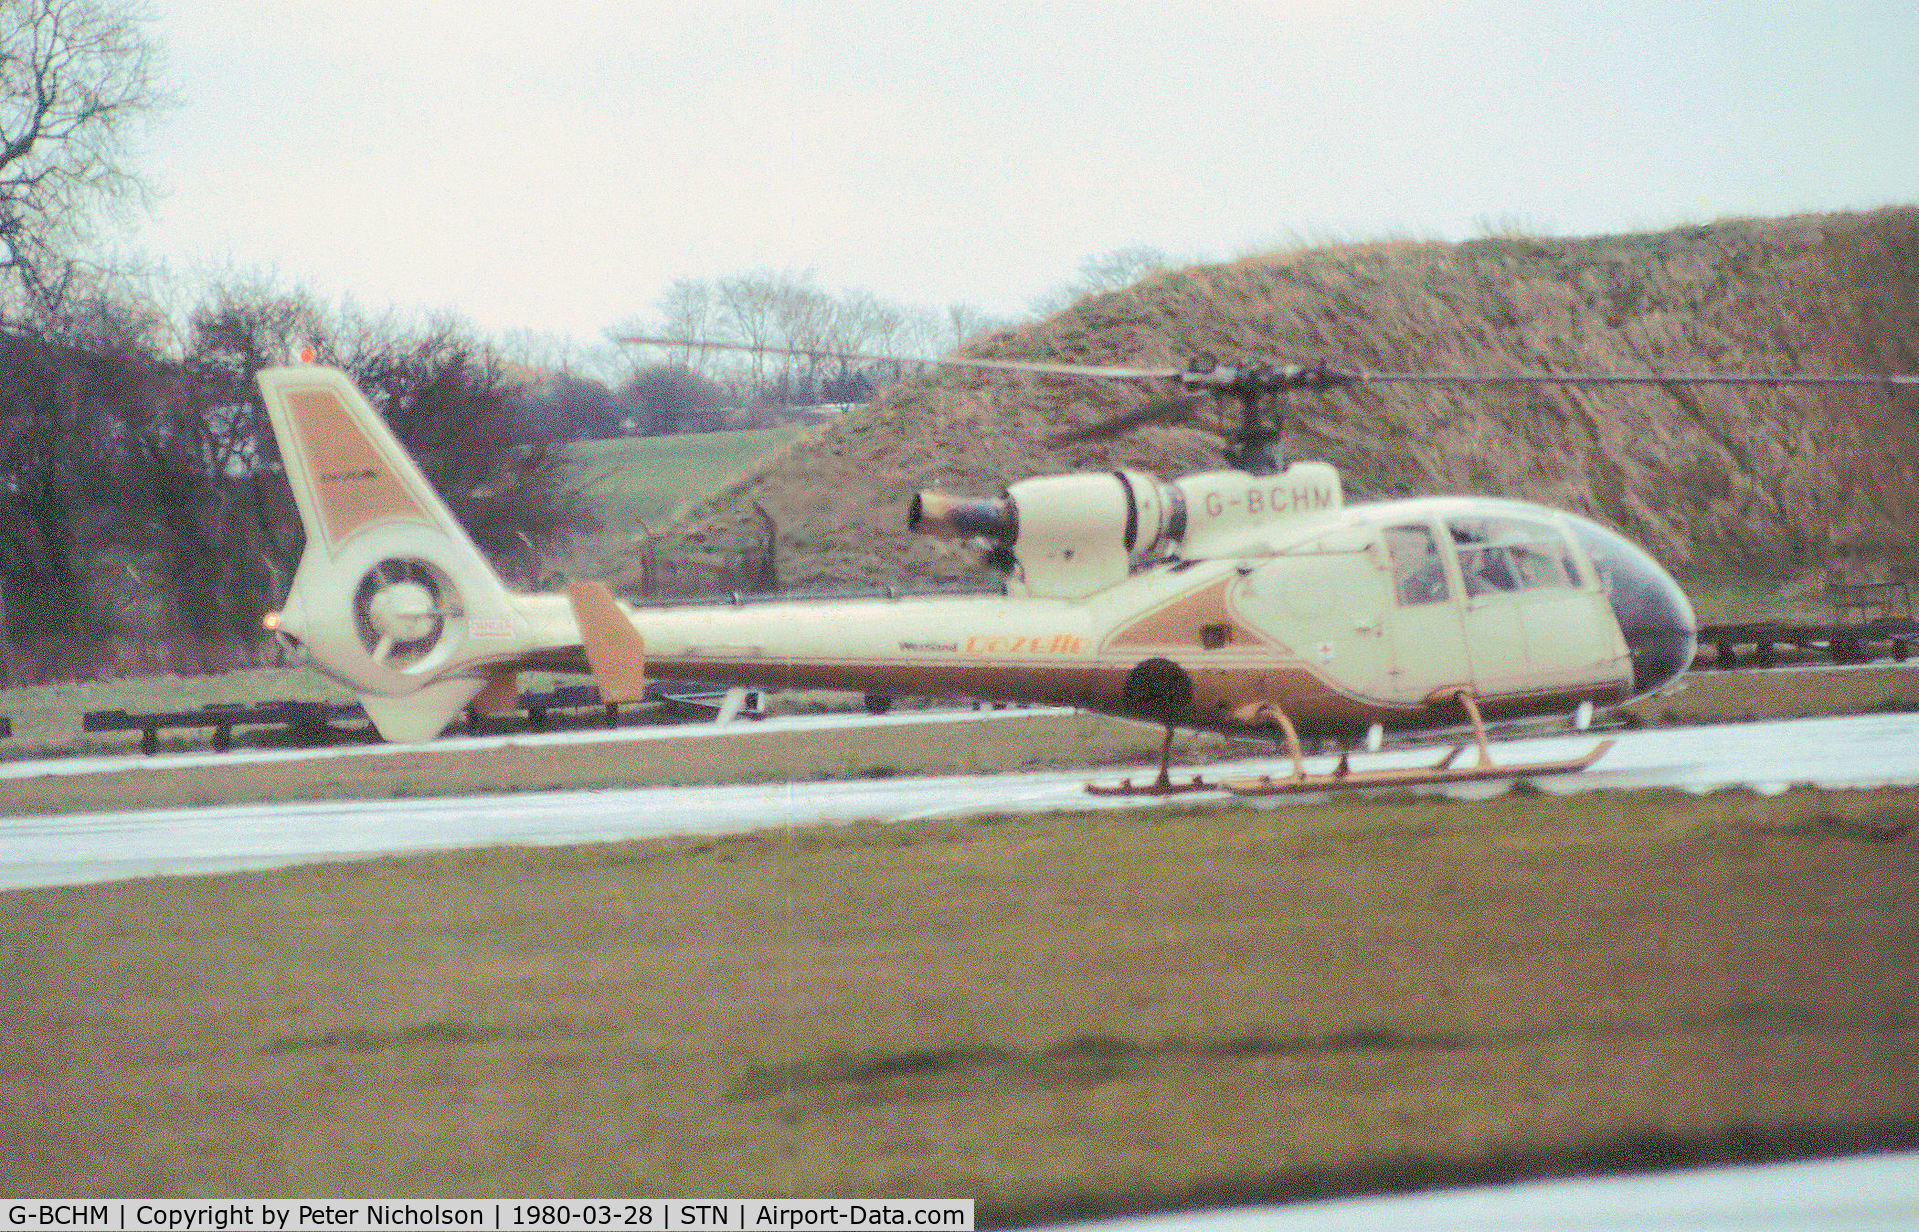 G-BCHM, 1974 Aerospatiale (Westland) SA-341G Gazelle C/N WA1168, SA-341G Gazelle of Westlands as seen at Stansted in March 1980.